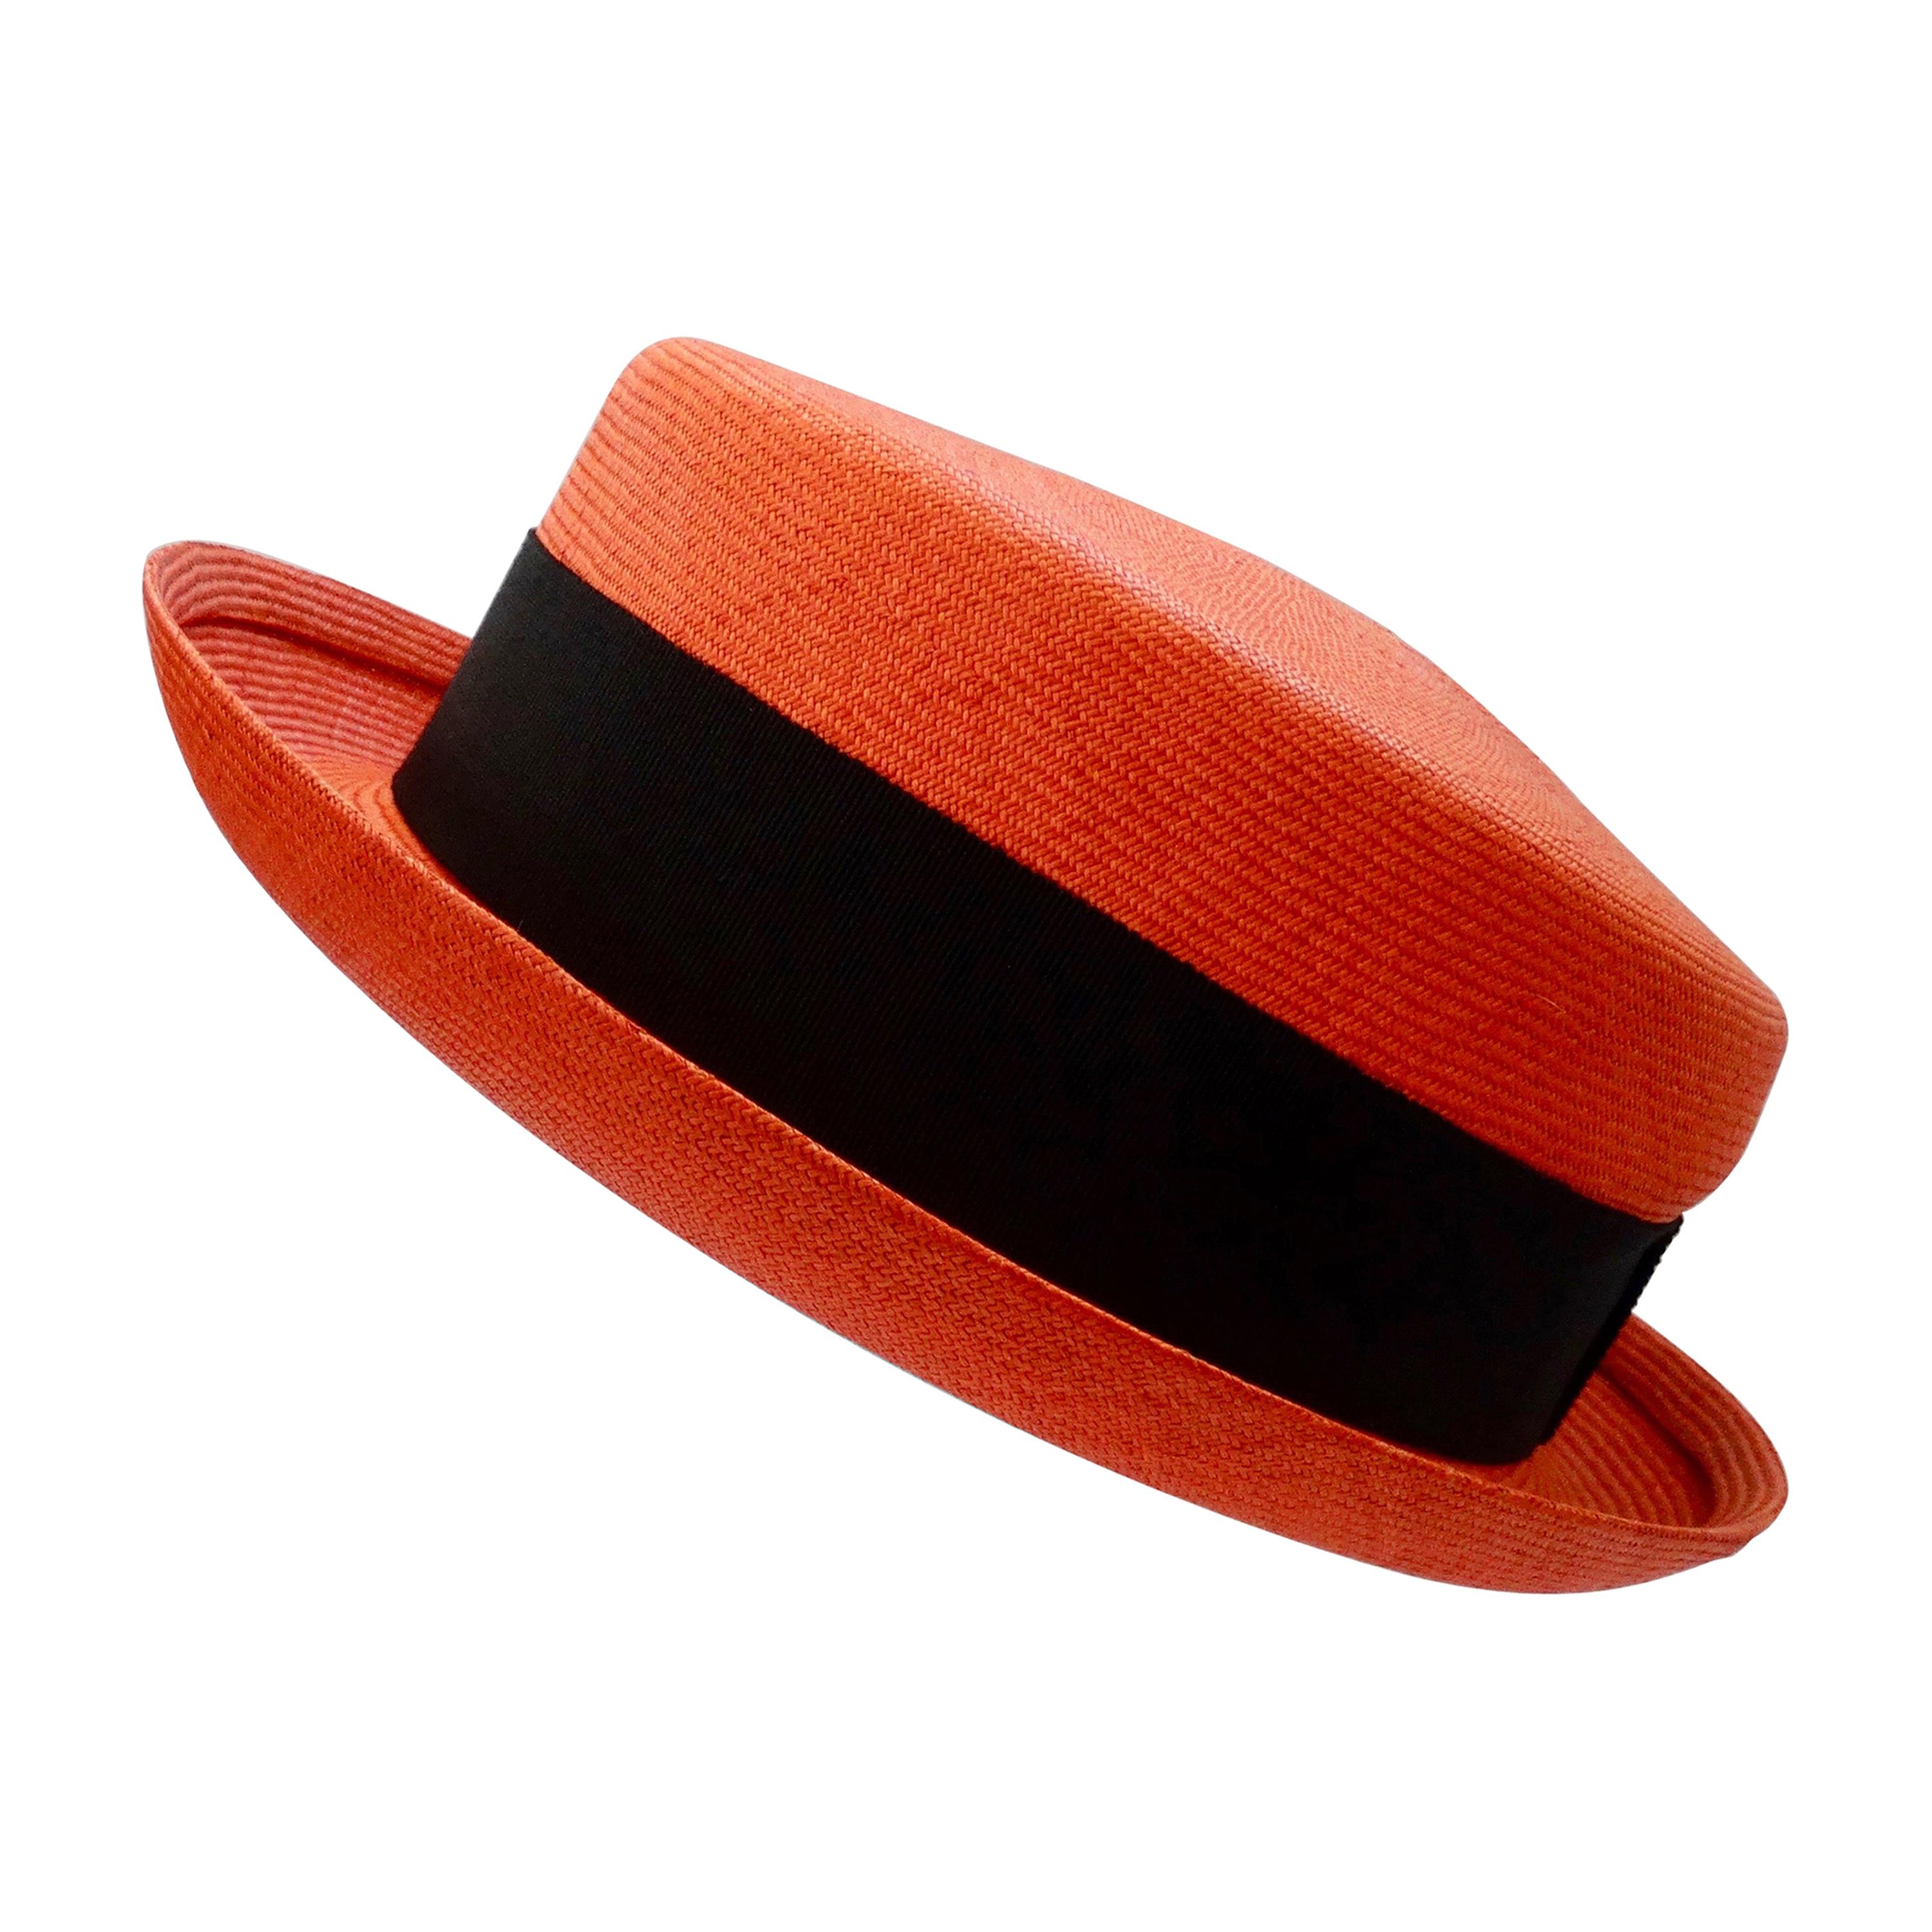 1990s Chanel Orange Straw Boater Hat